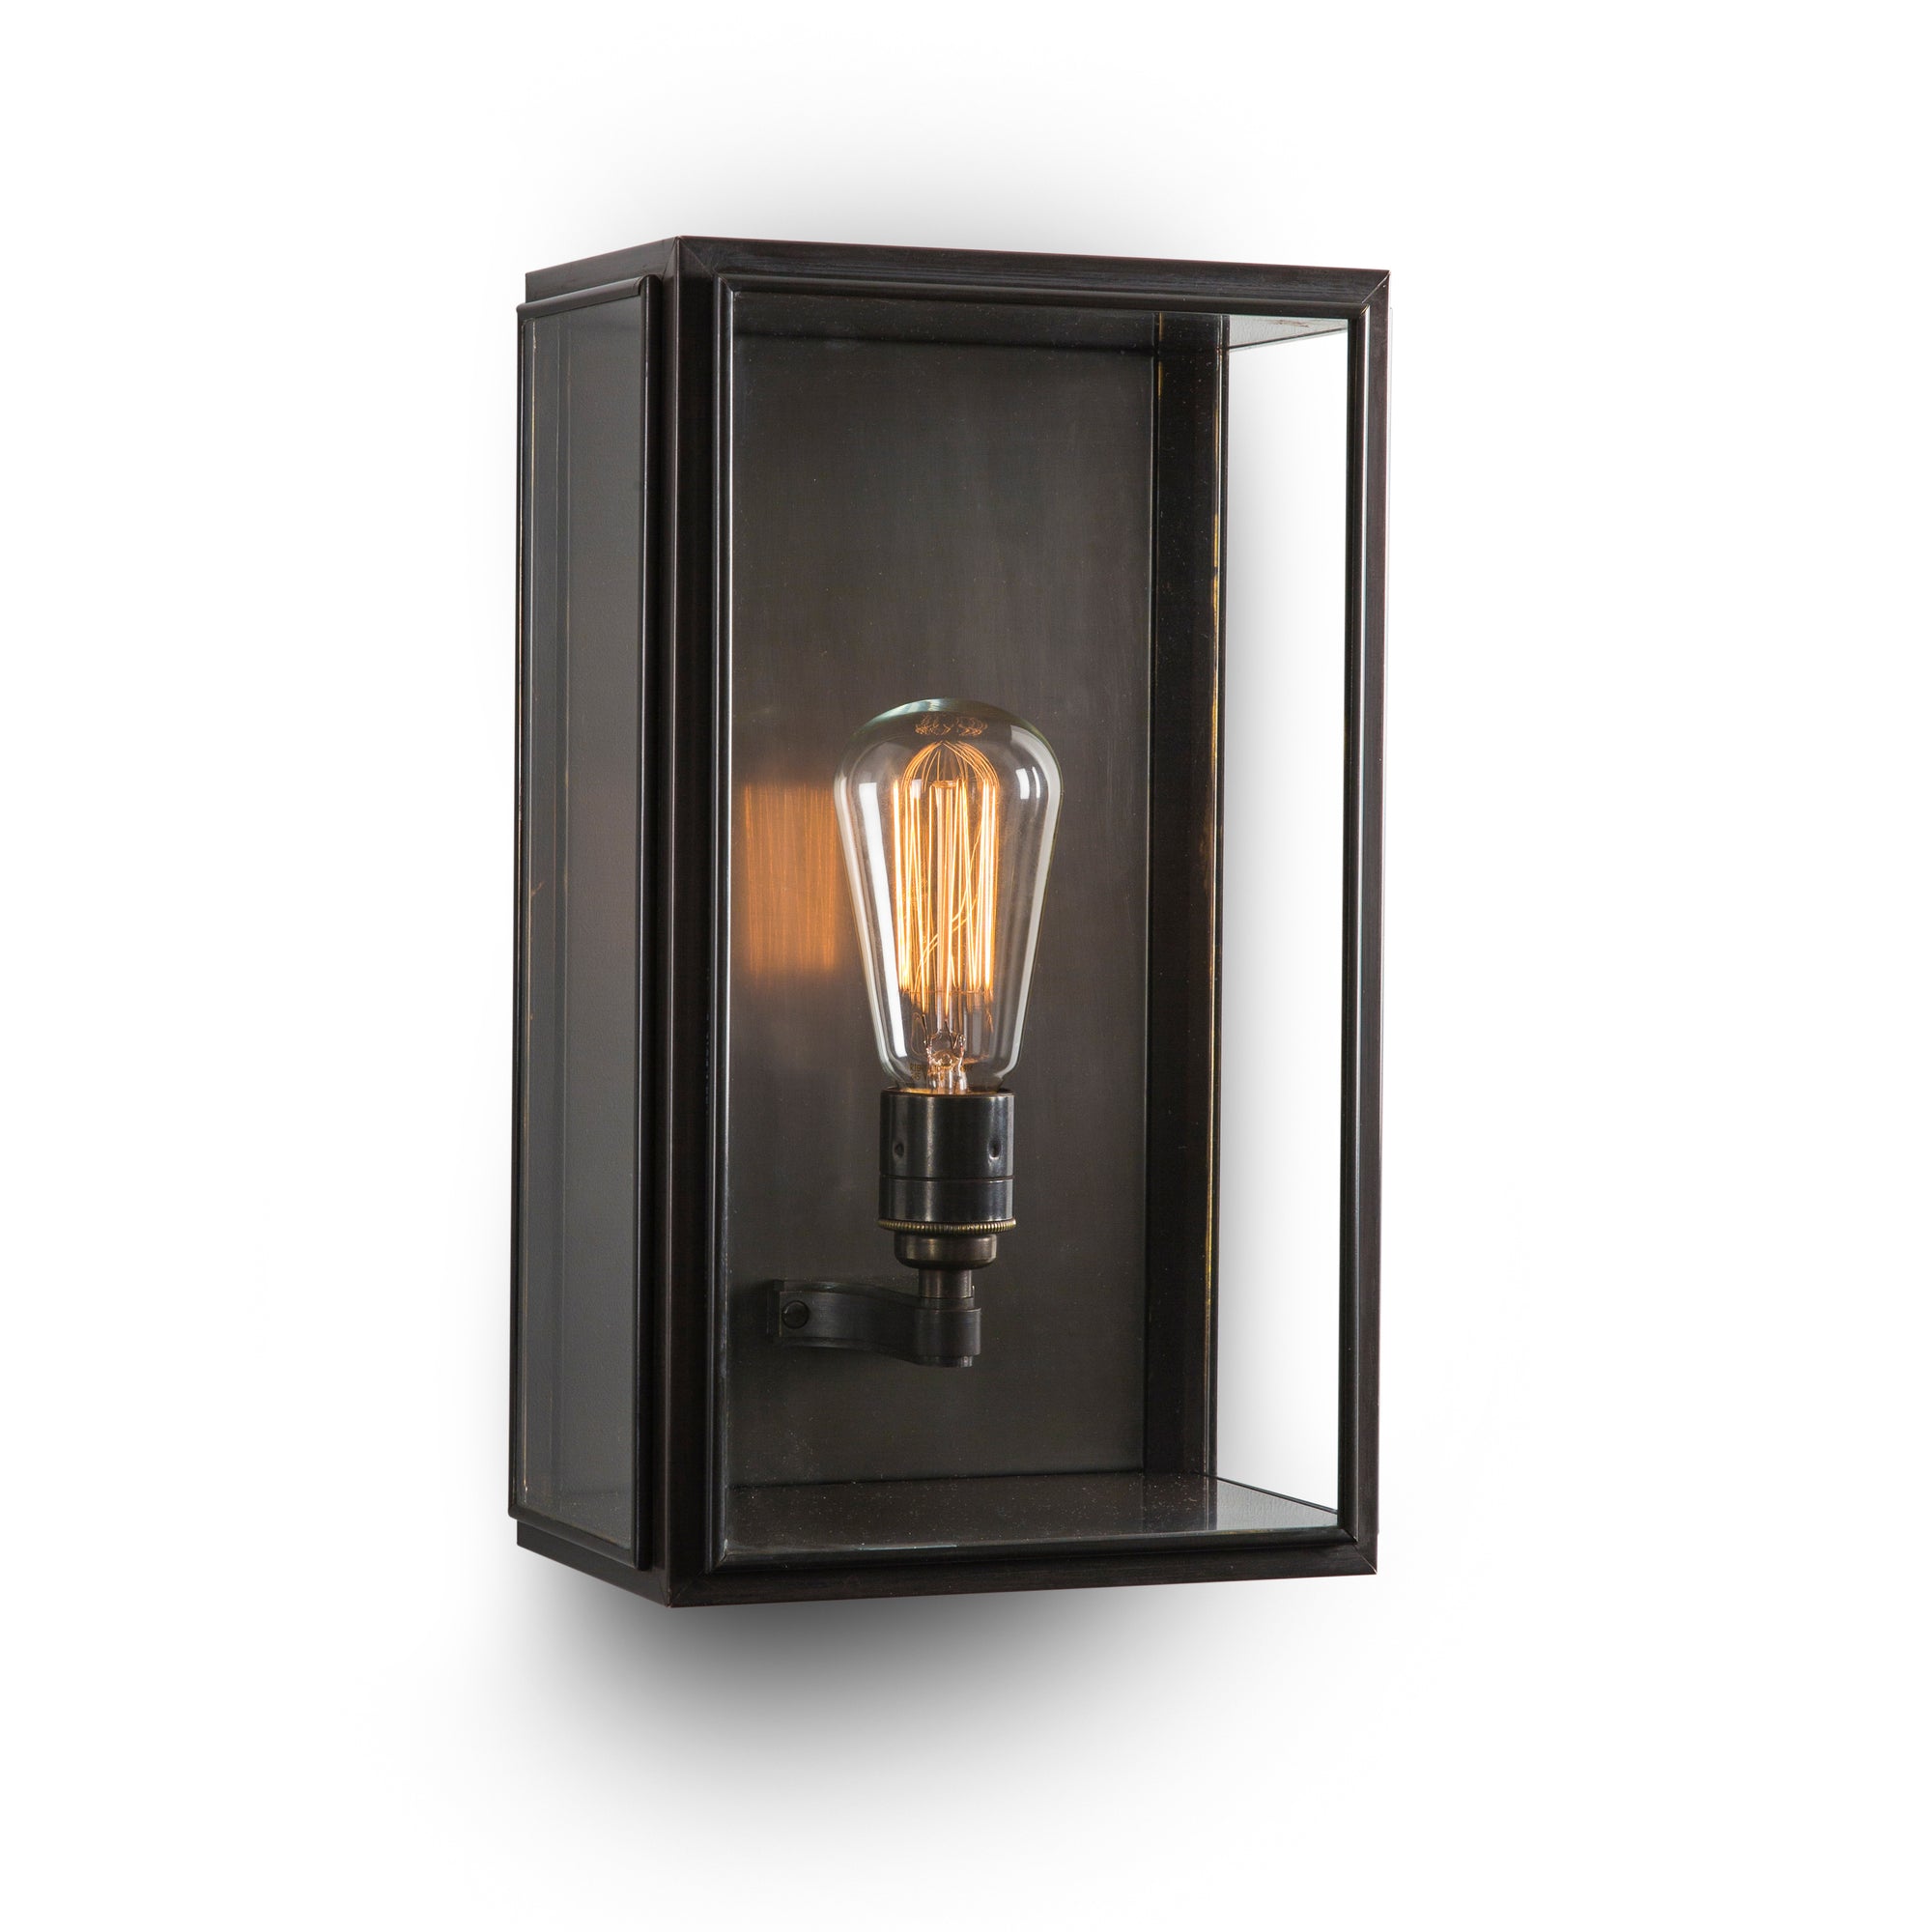 J Adams Birch Medium Wall Lantern box light in bronze with clear glass